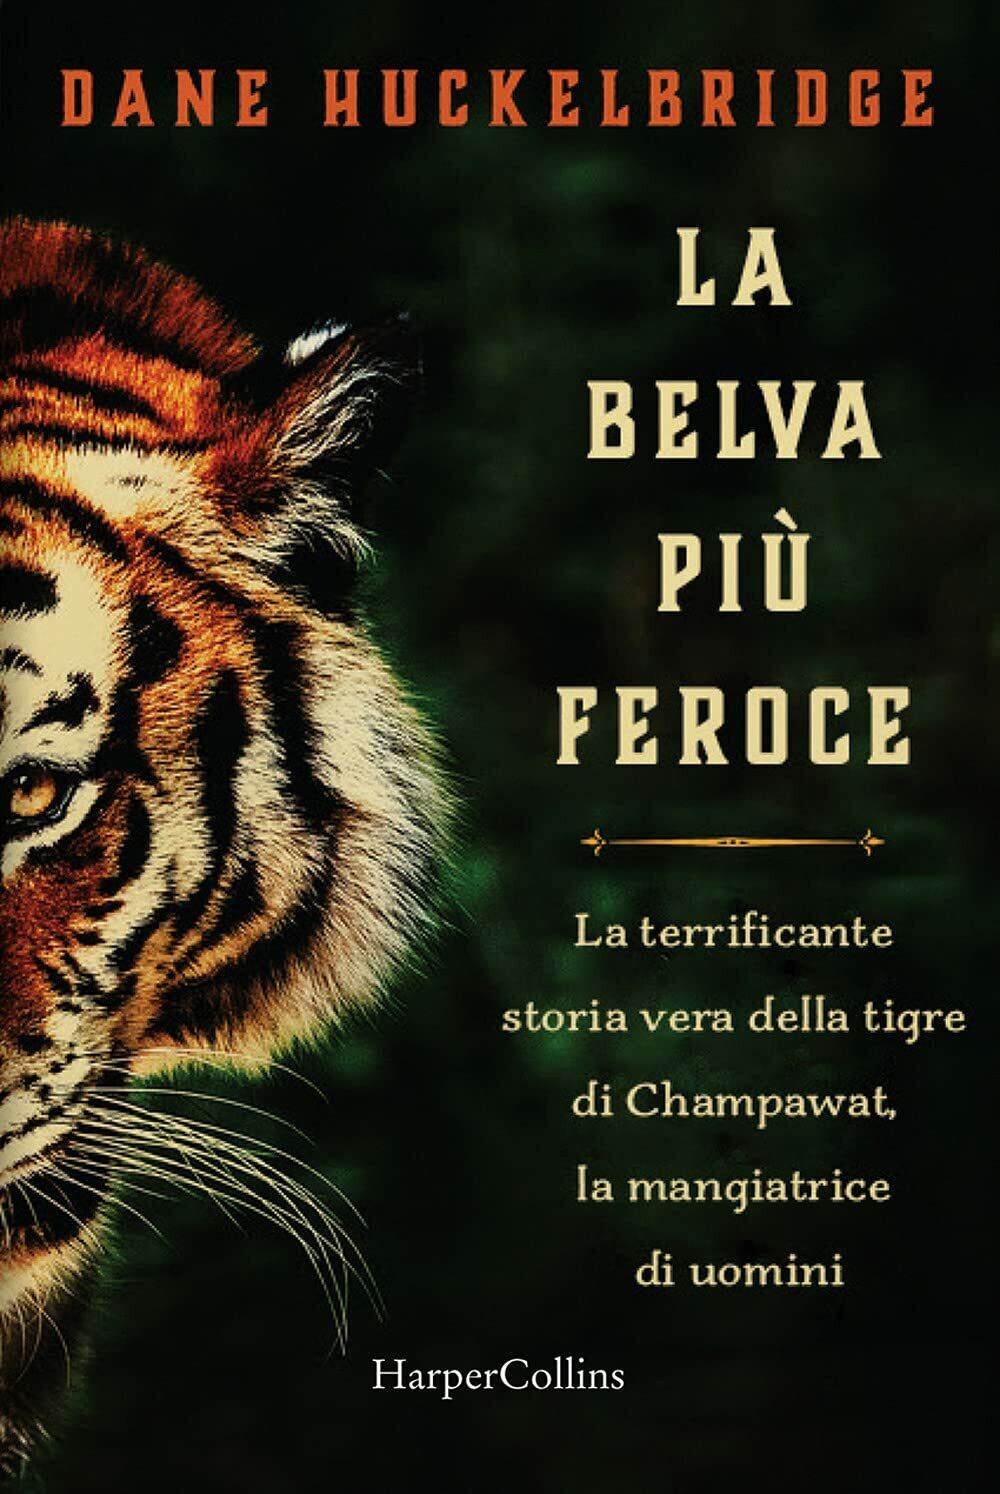 La belva pi? feroce - Dane Hucklebridge - HarperCollins Italia, 2021